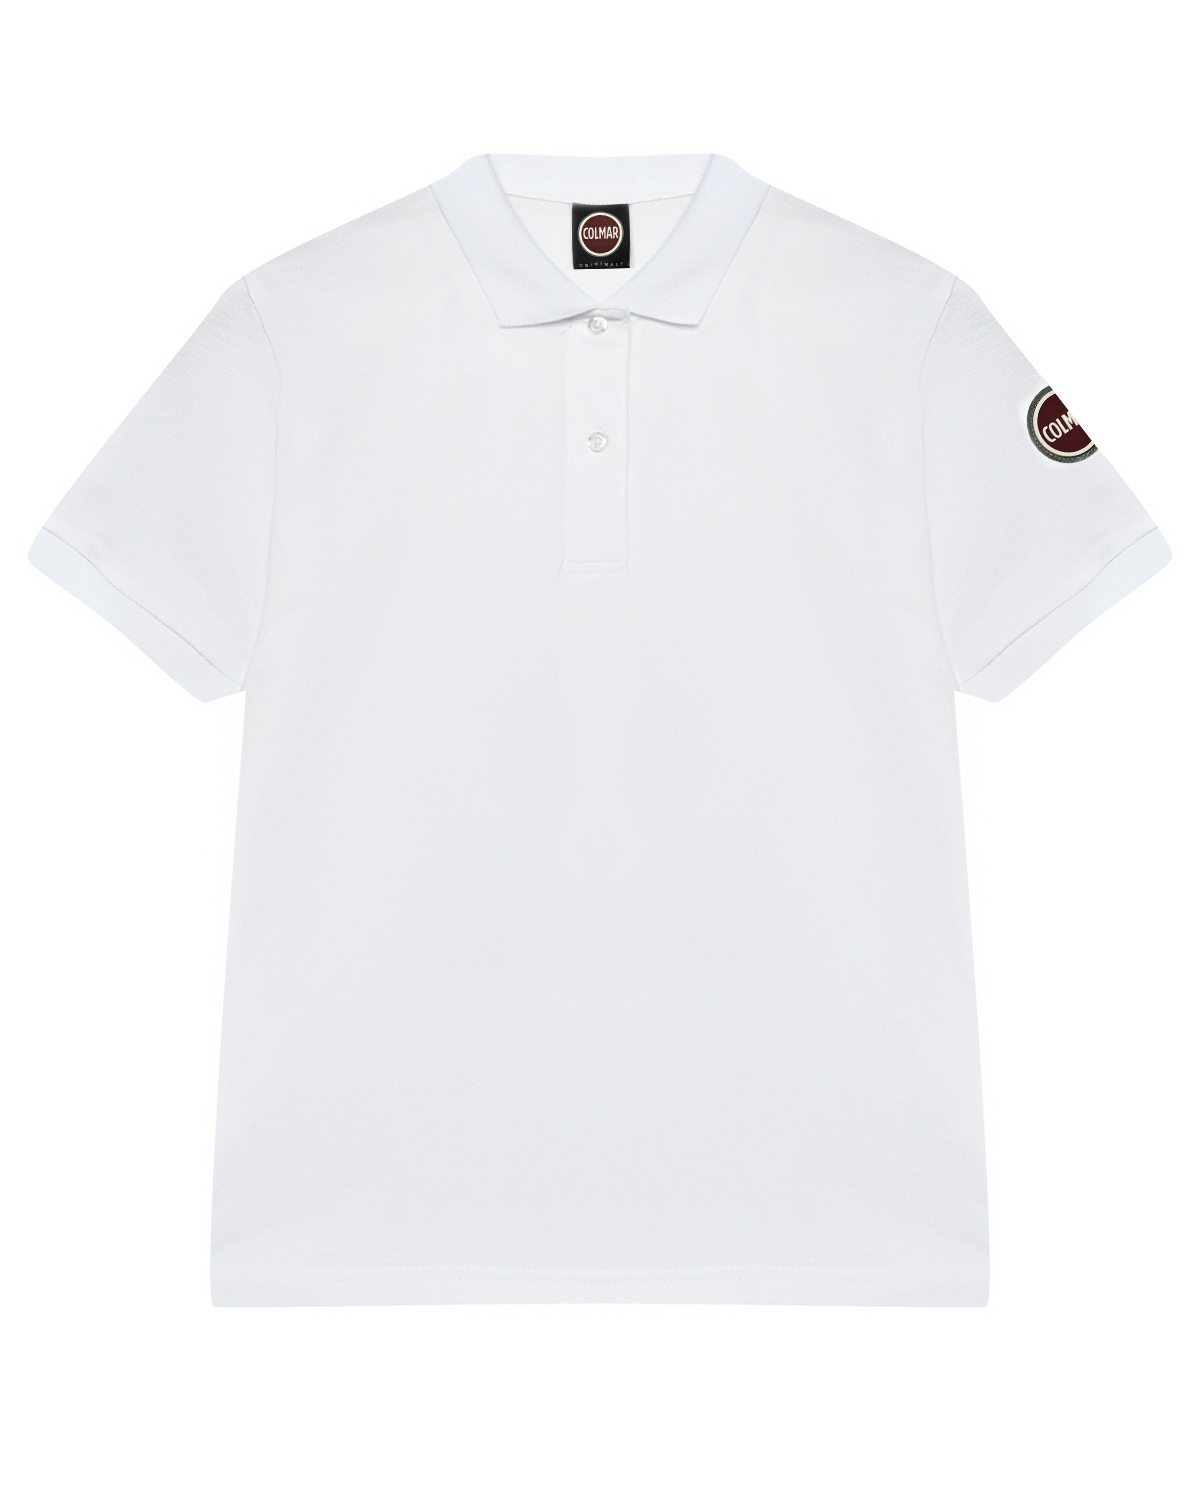 Футболка-поло с лого, белая Colmar Junior футболка с лого на груди белая moschino